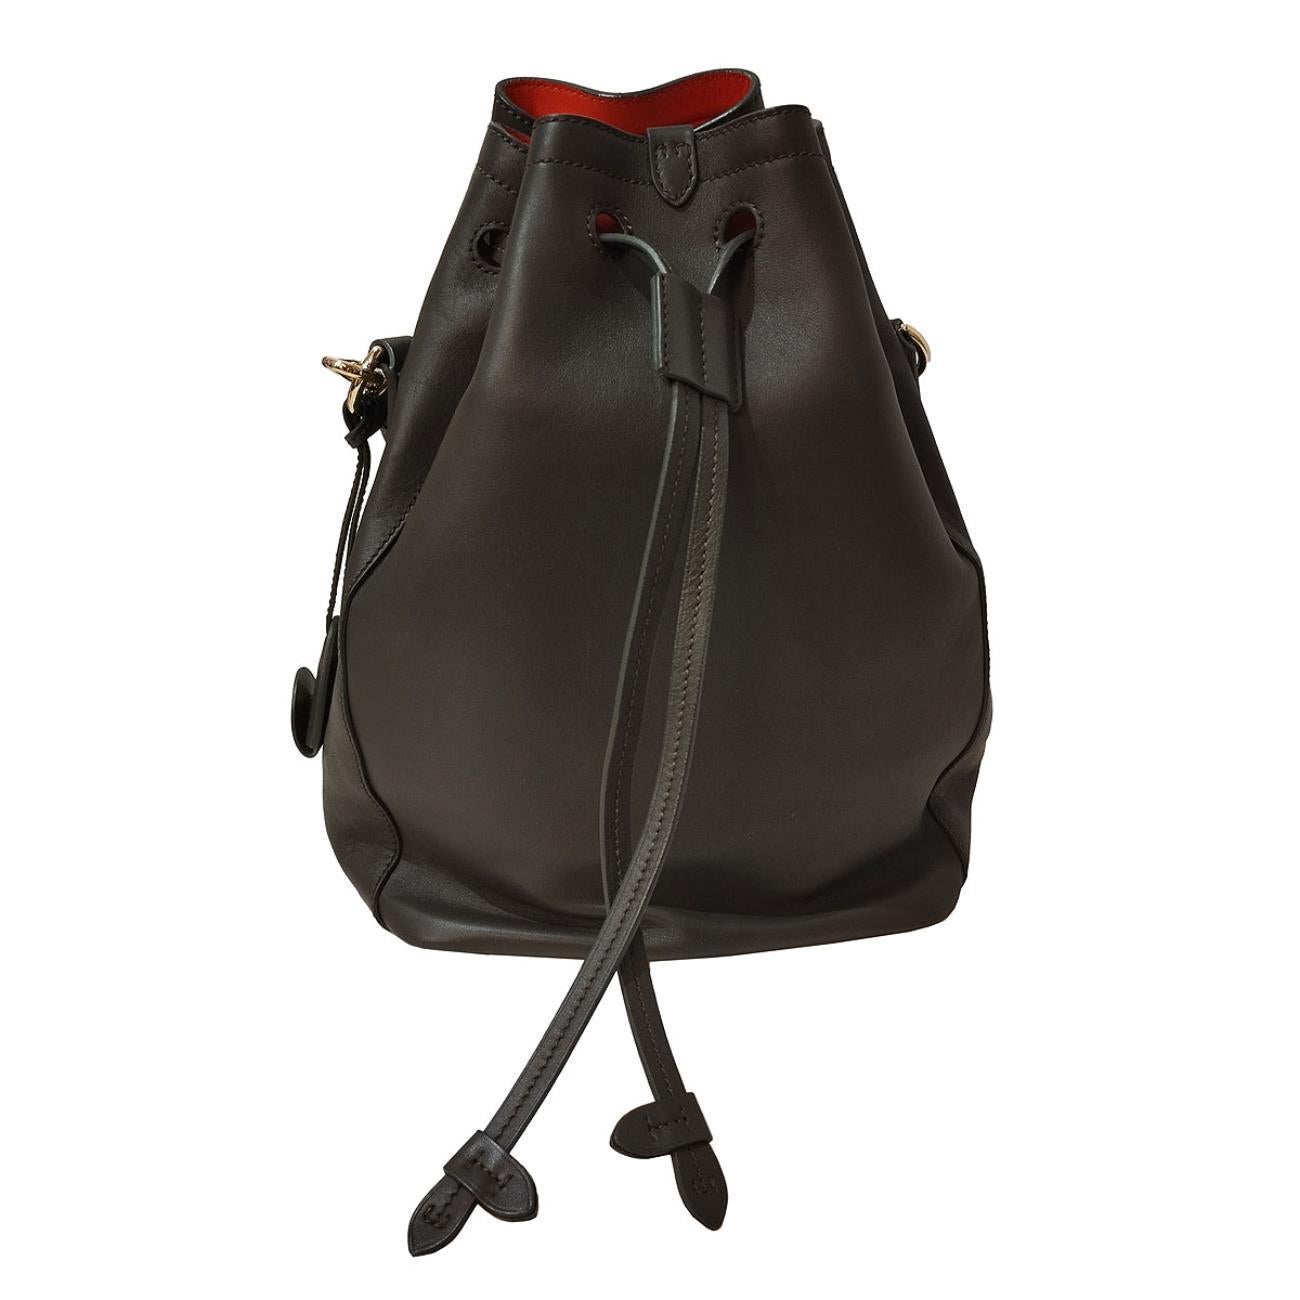 Ralph Lauren Ricky satchel size Unica In Excellent Condition For Sale In Gazzaniga (BG), IT